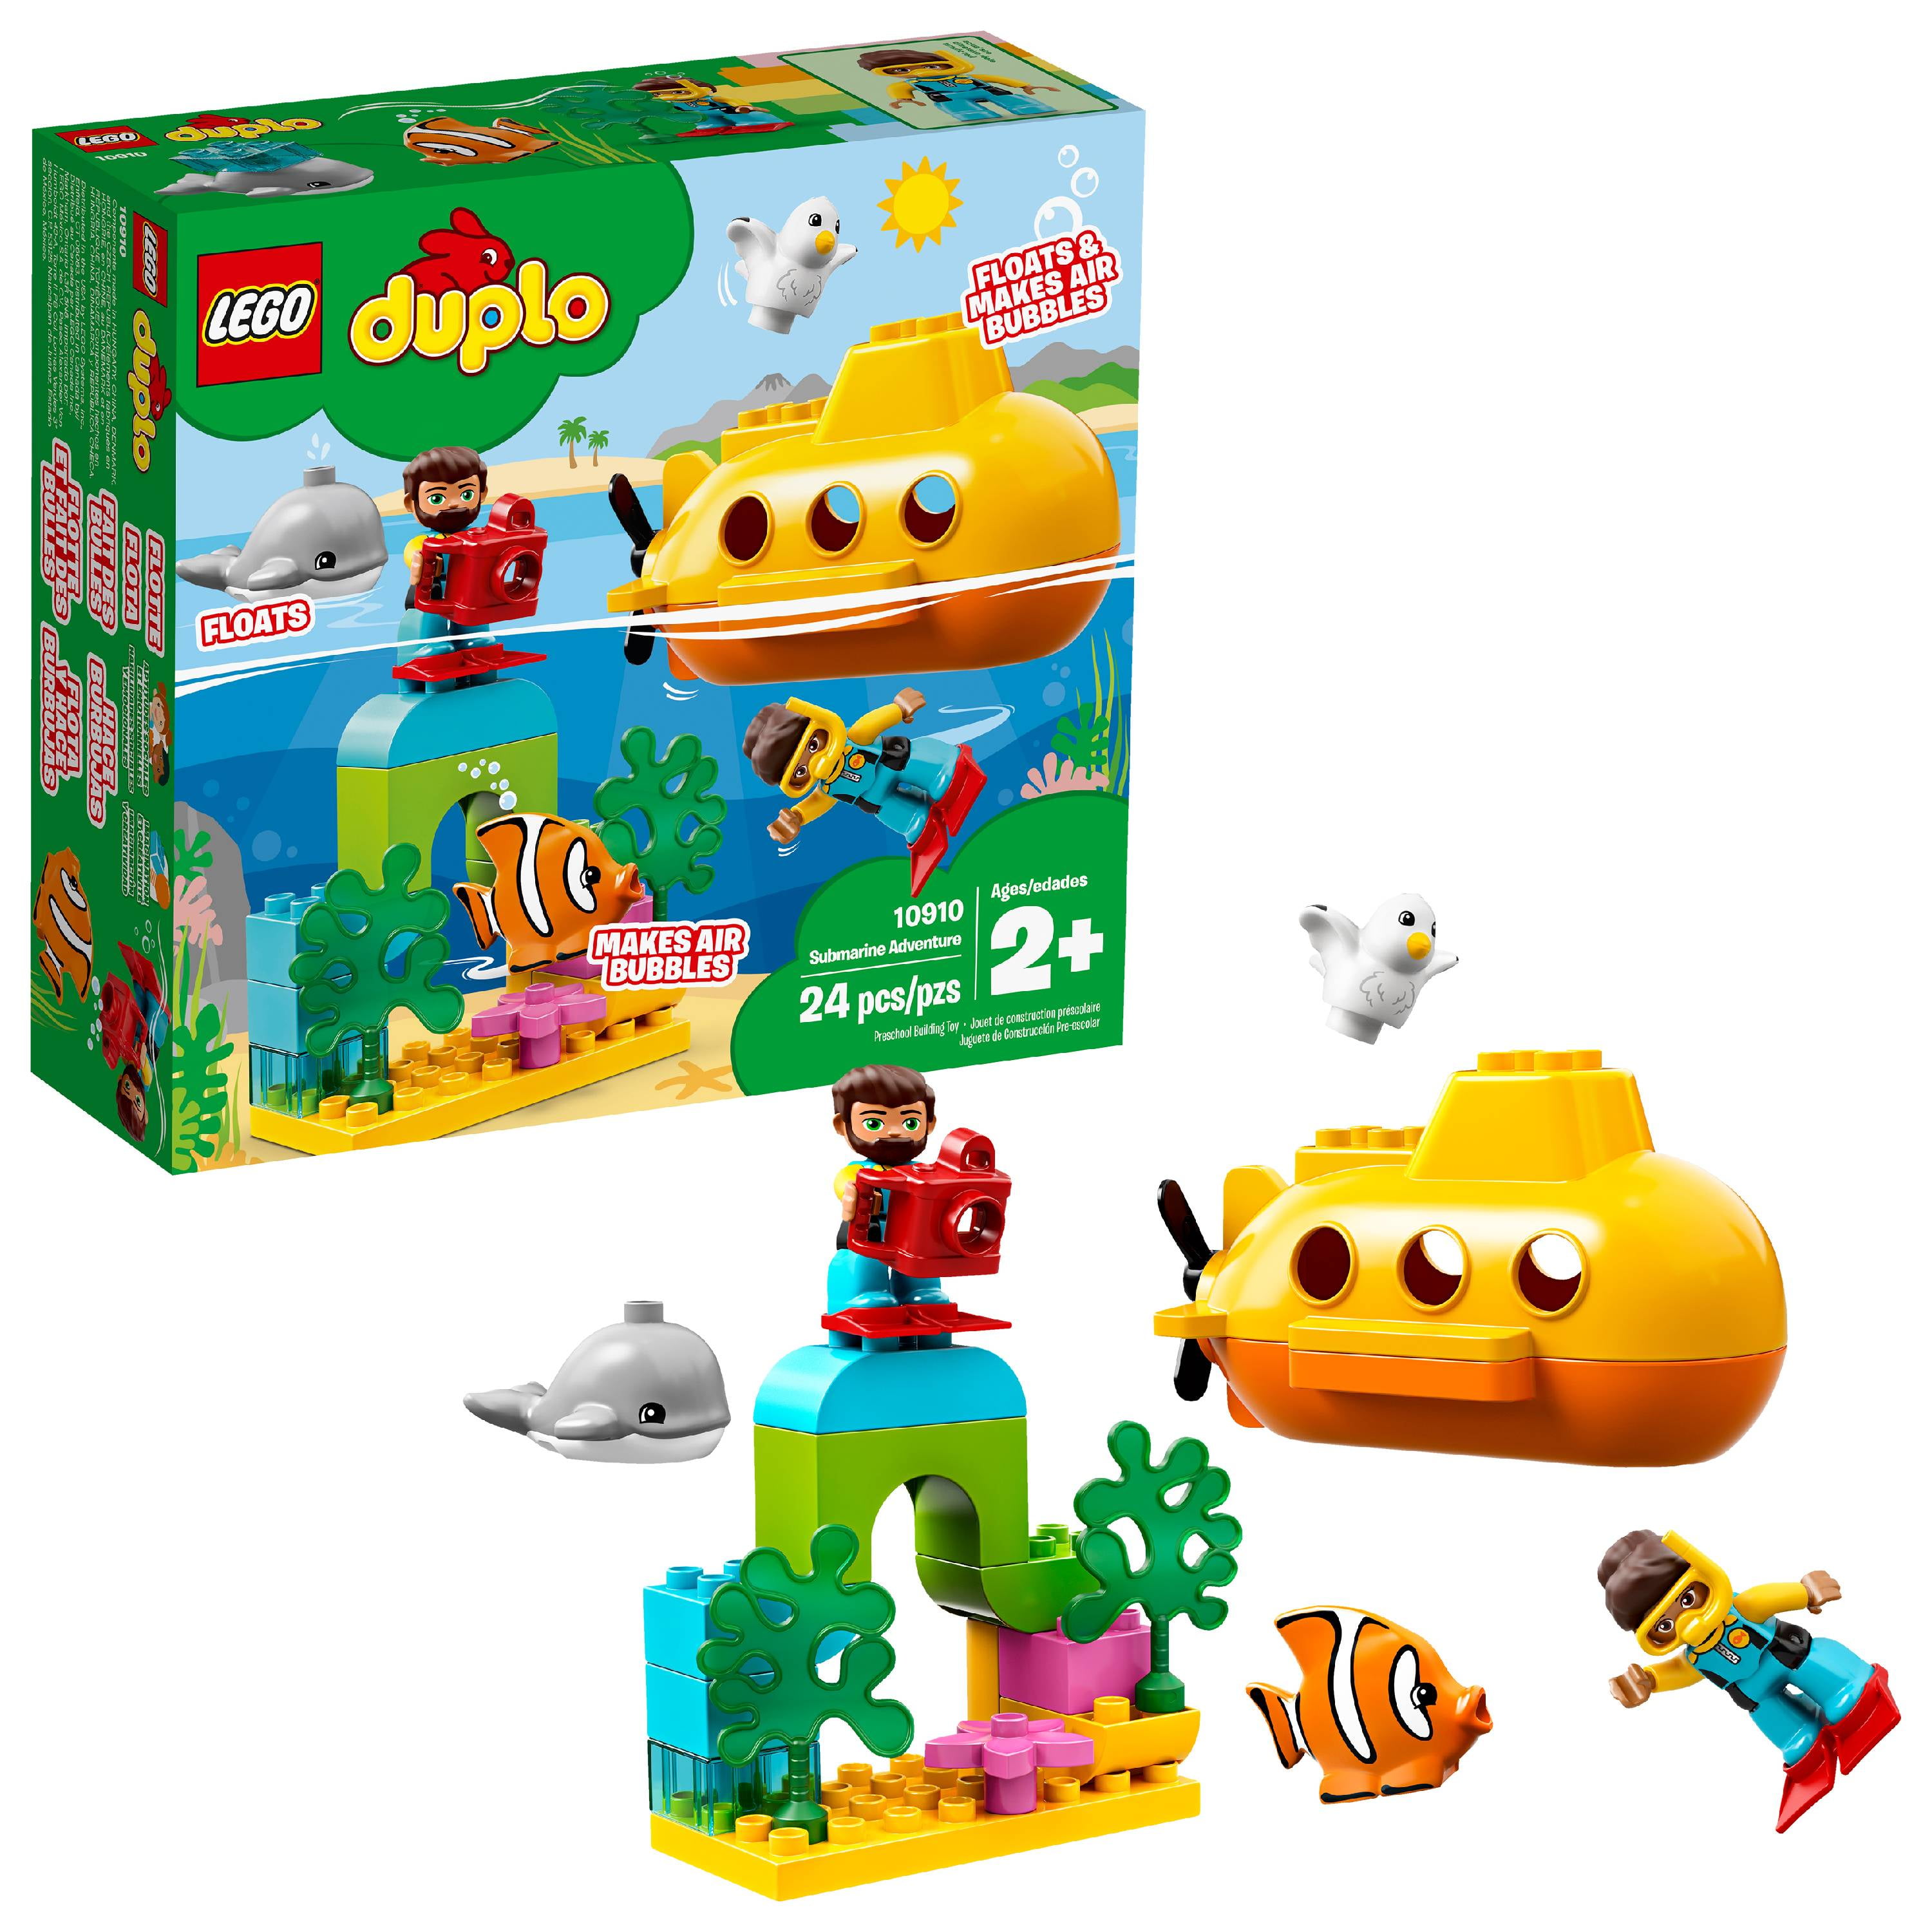 *BRAND NEW* Lego Duplo Set #10910 Yellow Submarine Adventure Floats!! 